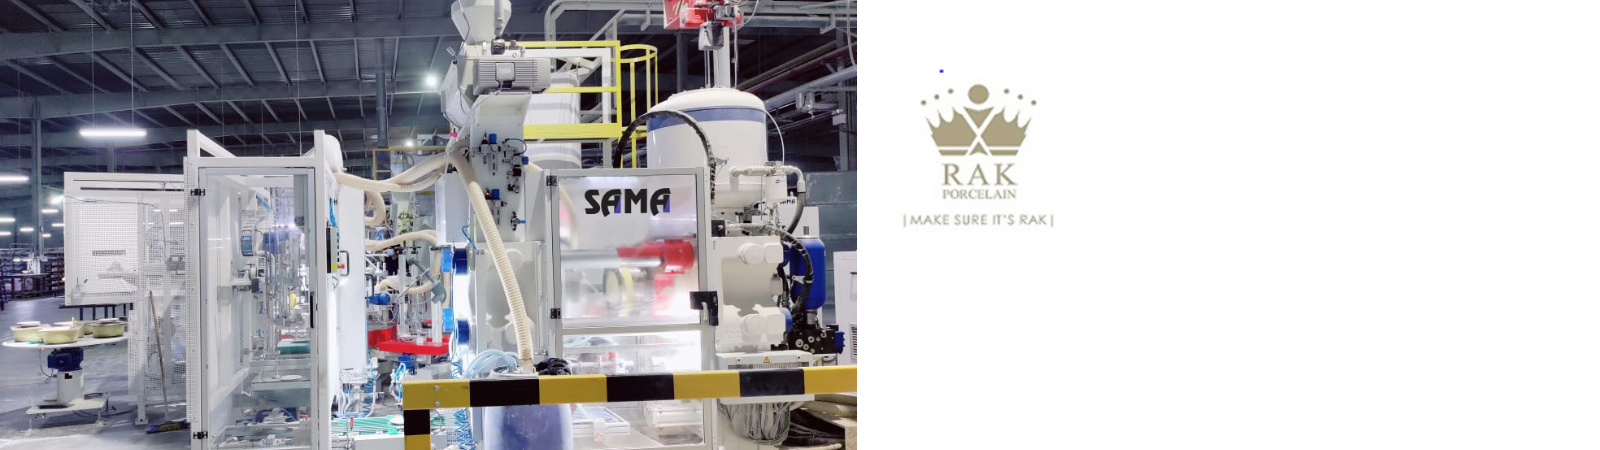 RAK UAE prepares to double tableware production output with SACMI-SAMA